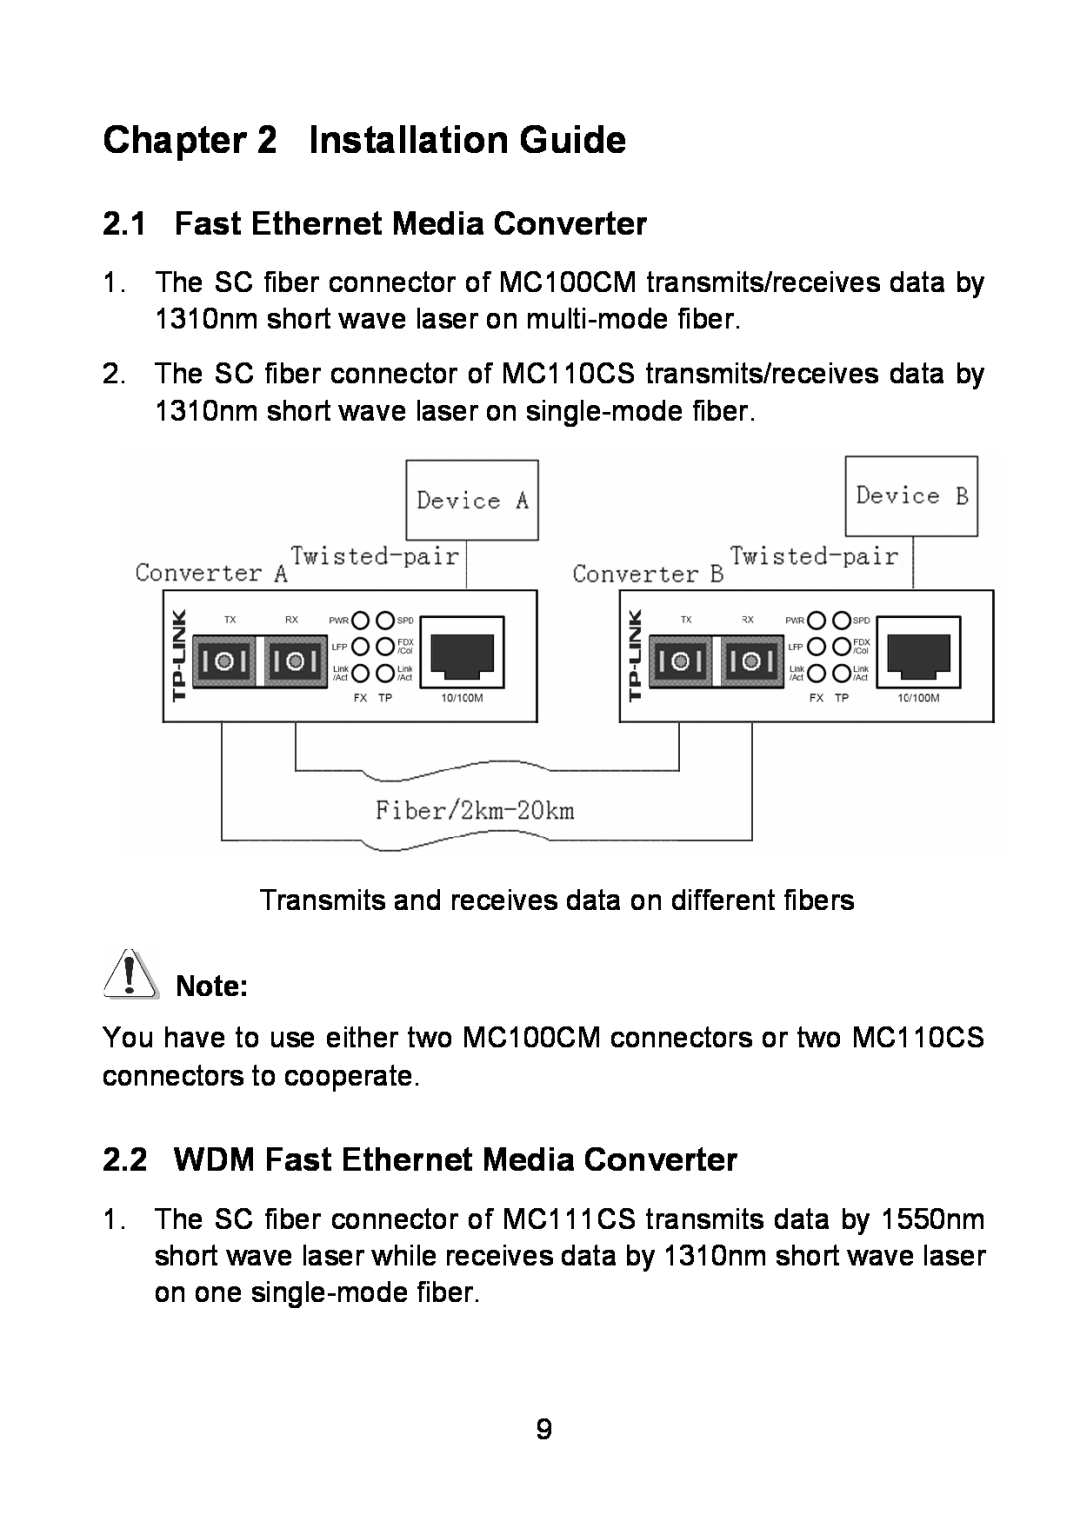 TP-Link MC111CS, MC112CS, MC100CM manual Installation Guide, WDM Fast Ethernet Media Converter 